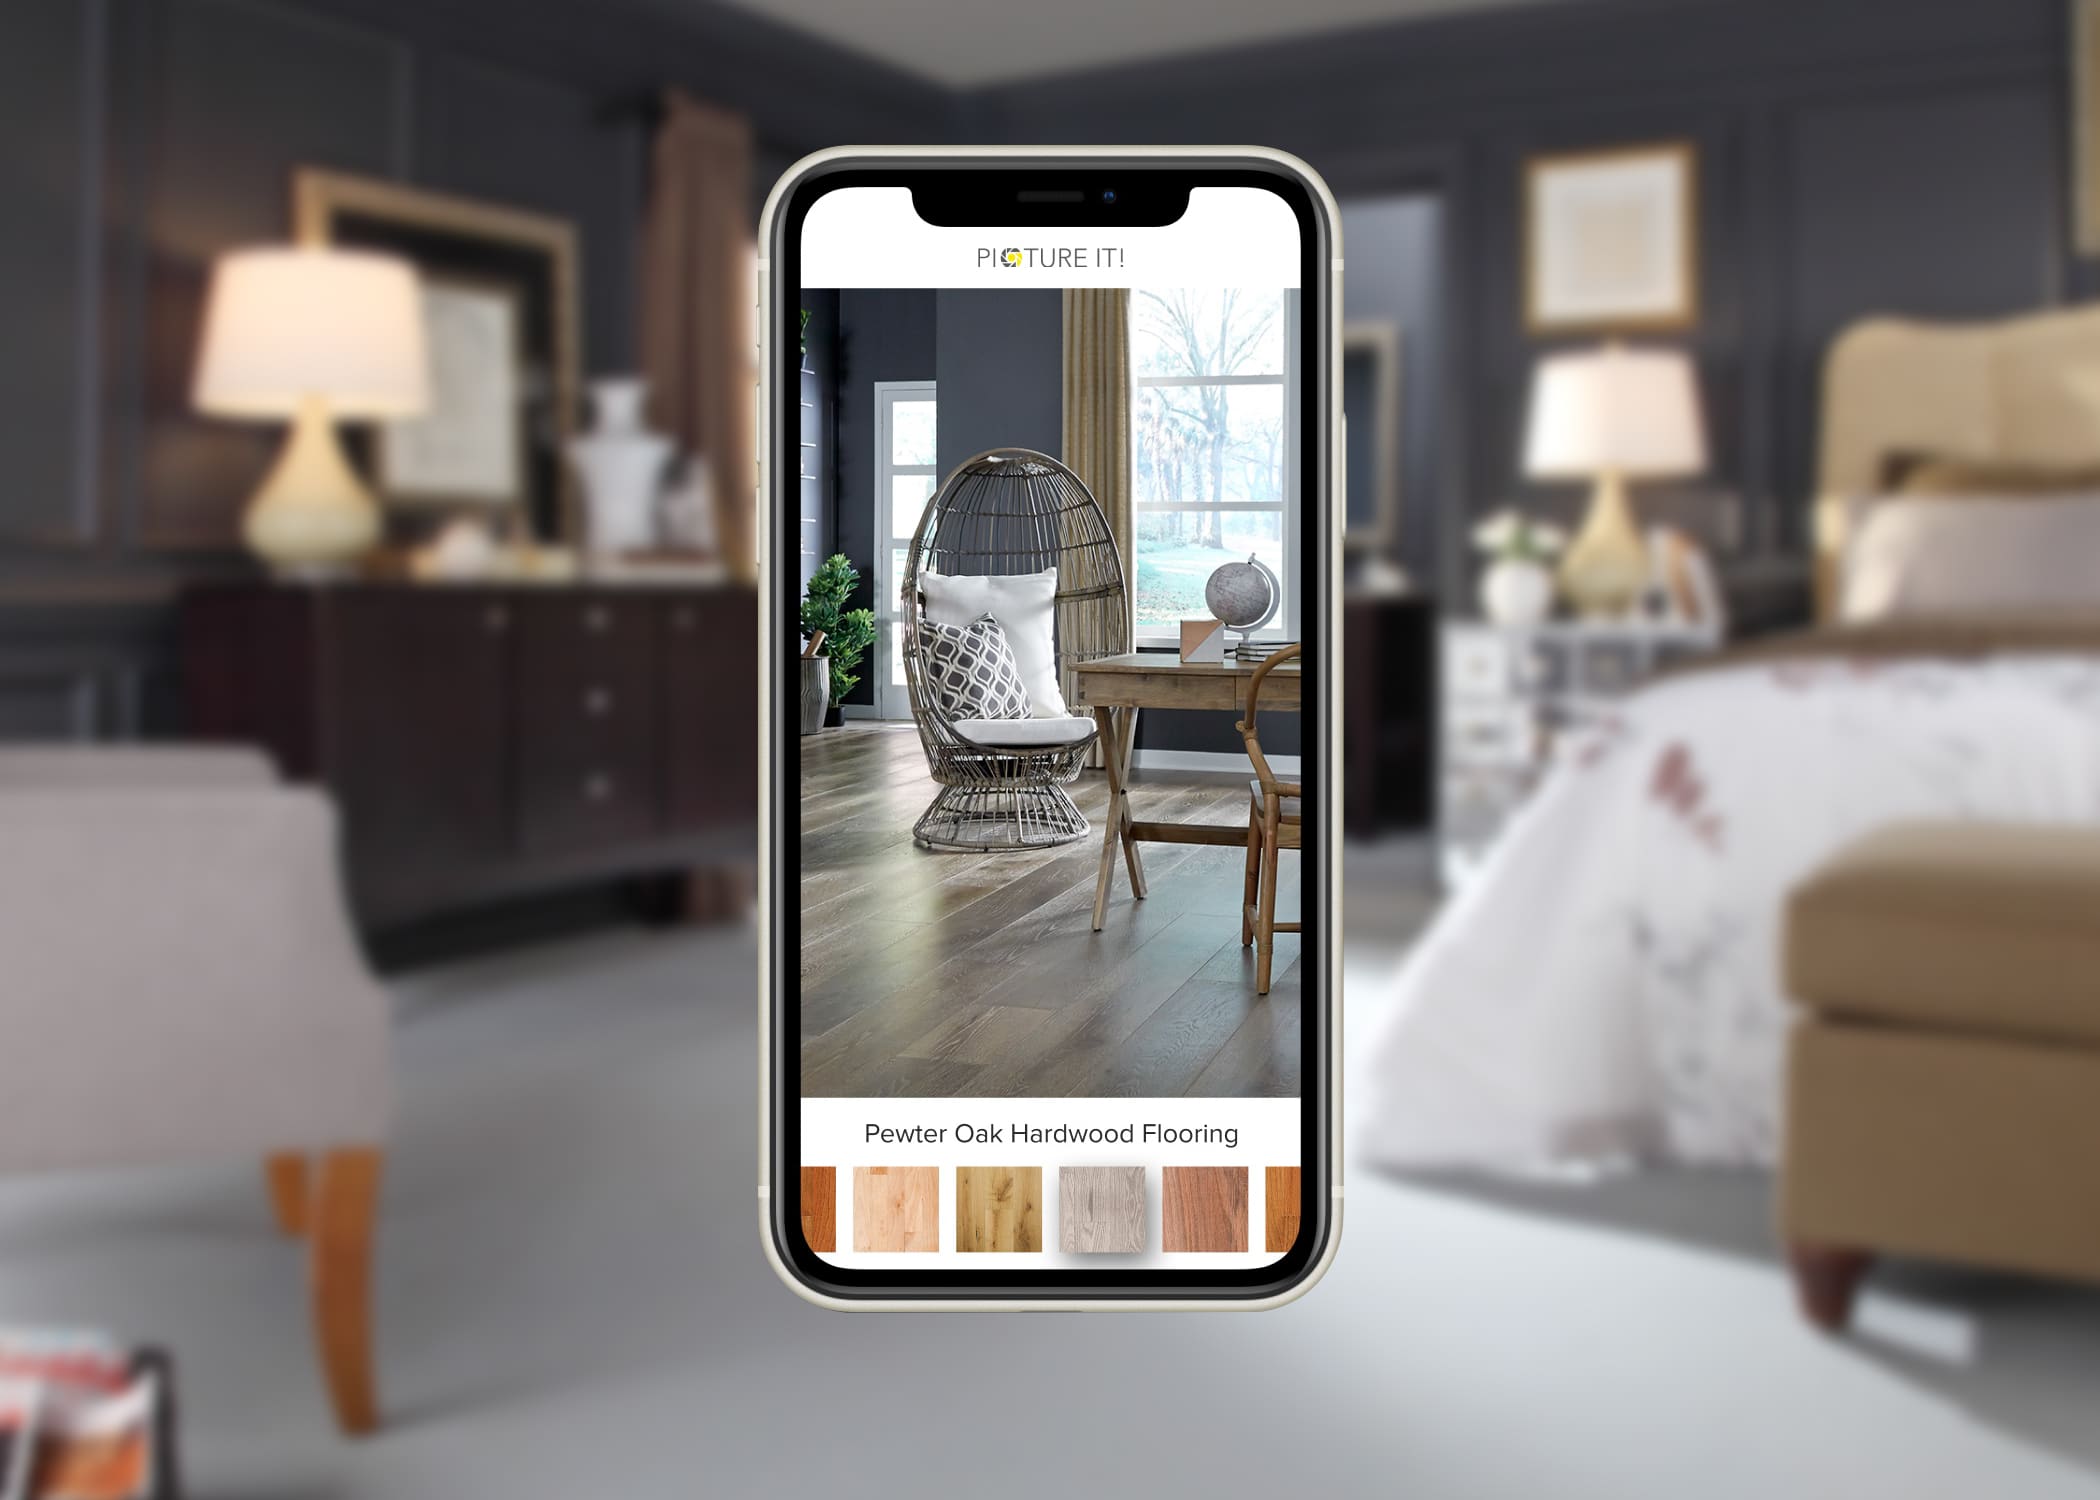 mobile phone showing customer room with flooring options below and blurred bedroom scene behind phone